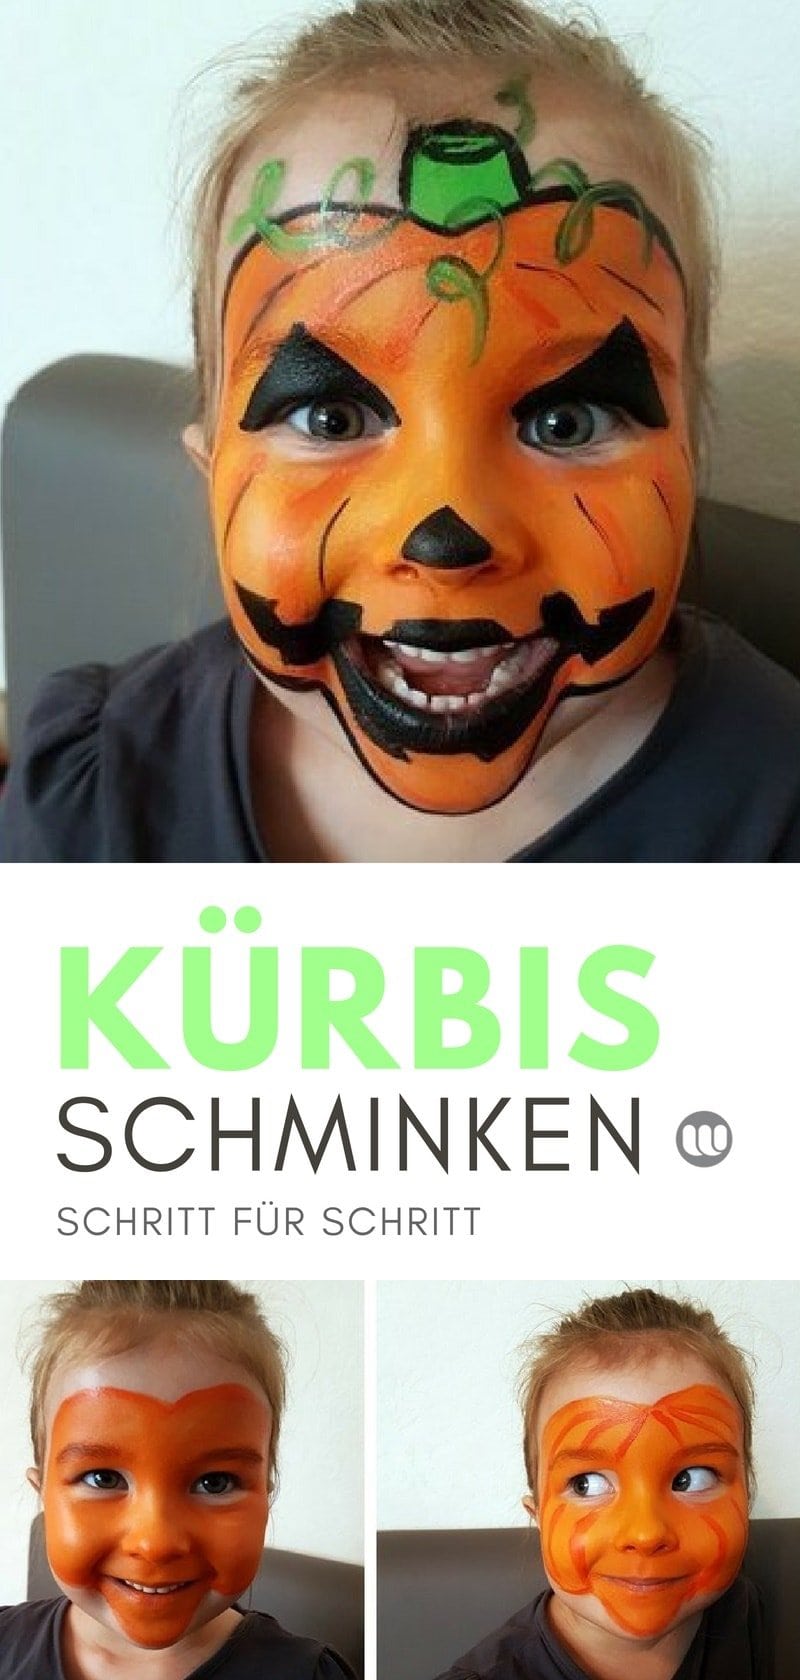 Schminkkanleitung zum Kürbis Schminken bei Kindern #Halloween #schminken #Kürbis